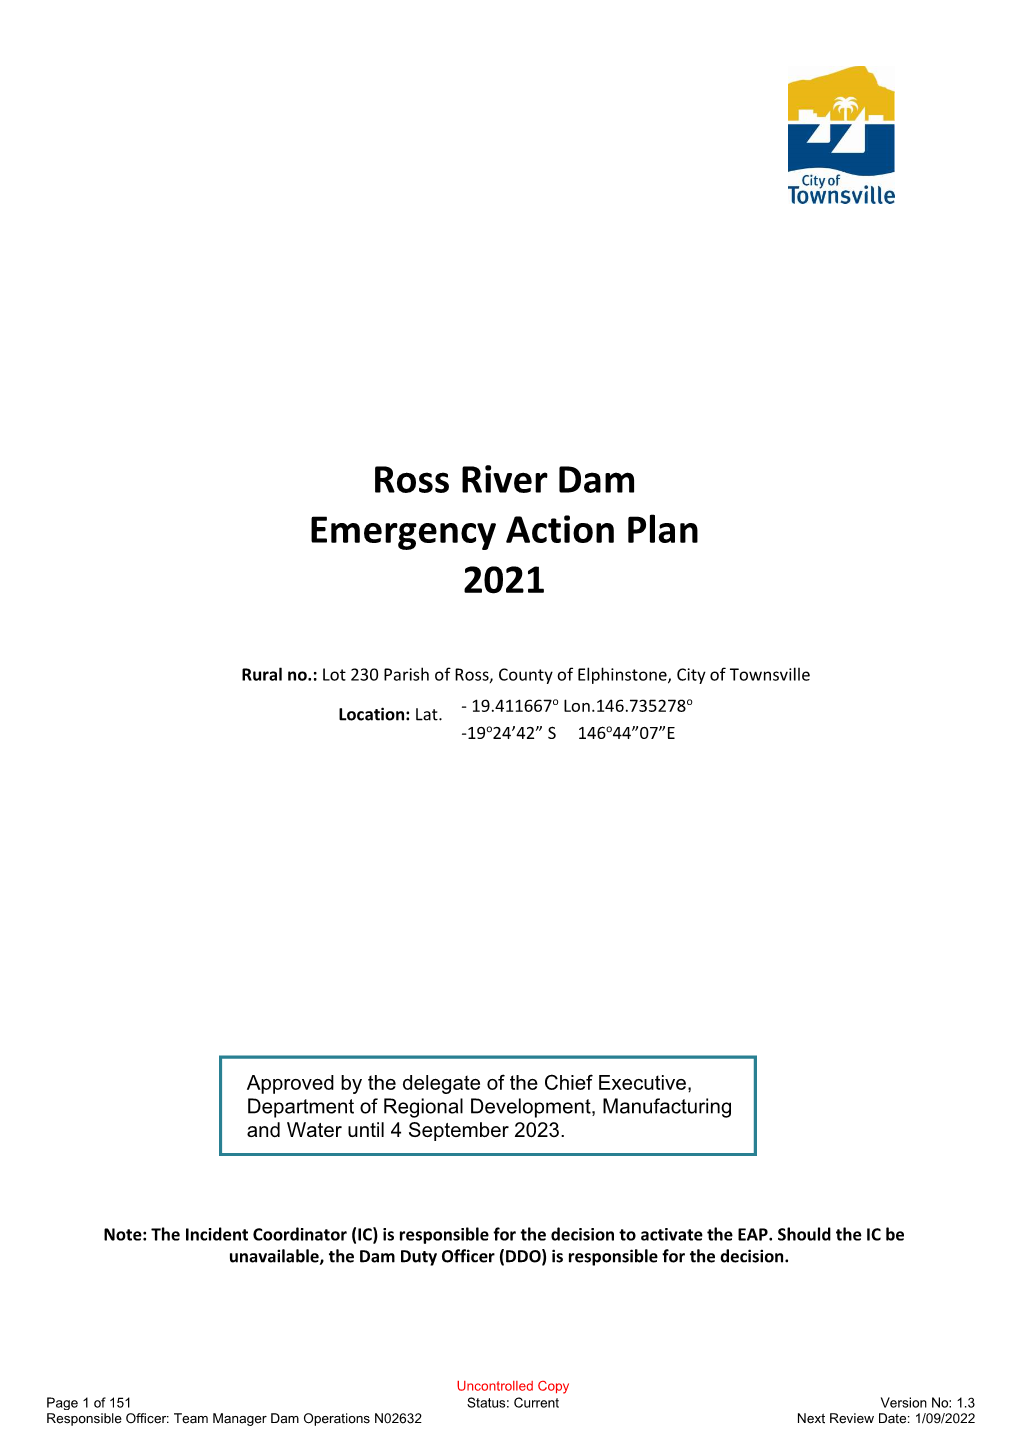 Ross River Dam Emergency Action Plan 2021